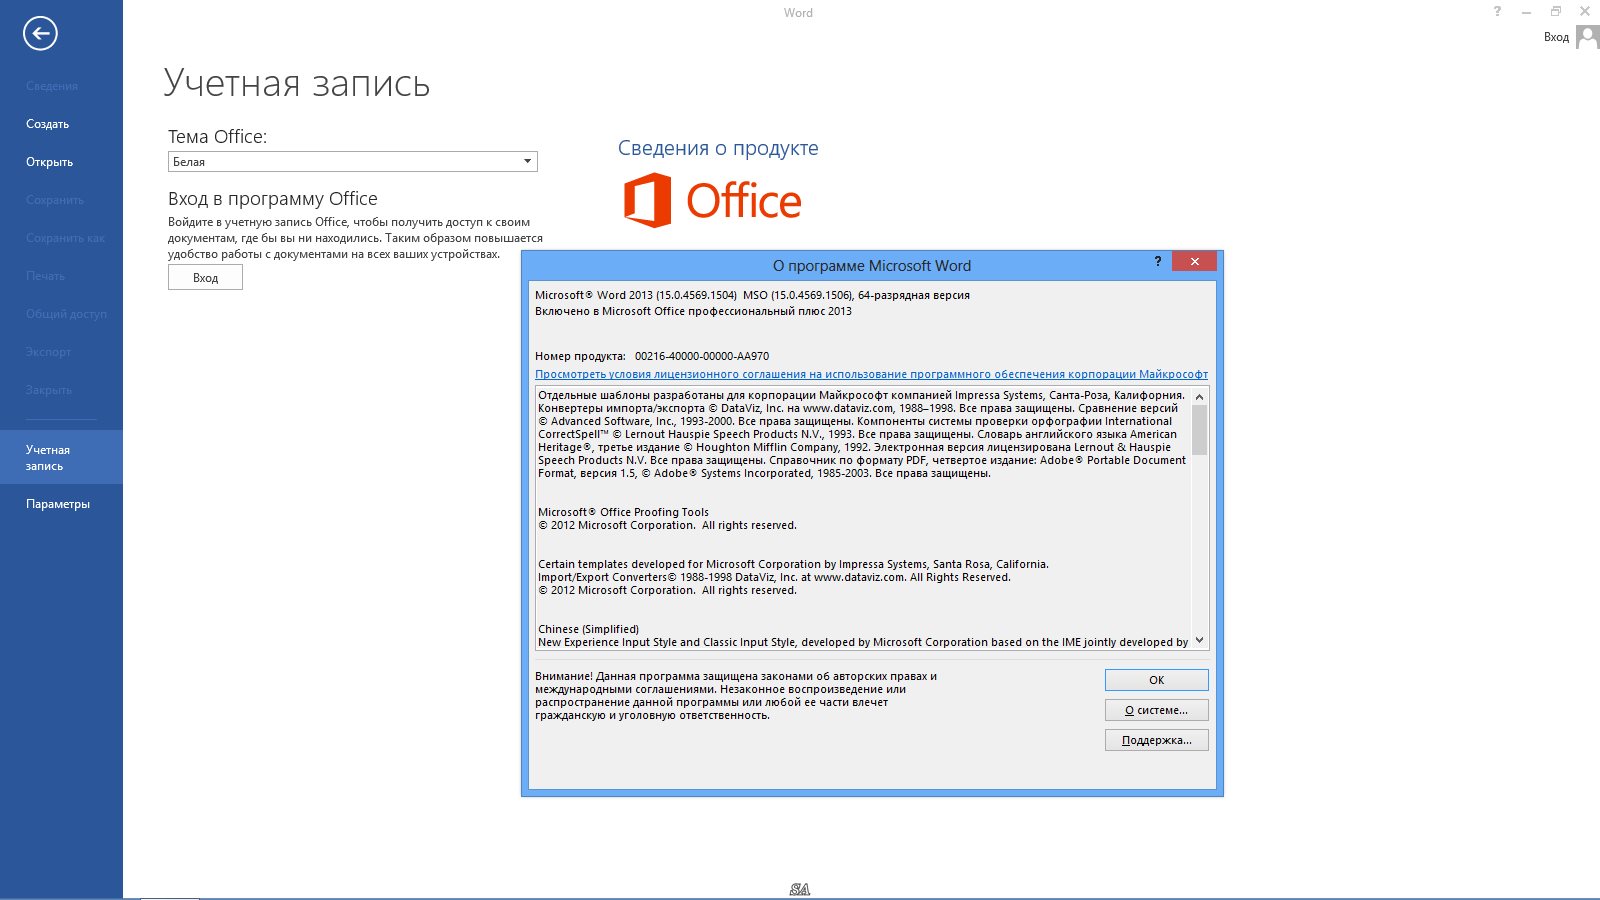 Microsoft Office 2013 Professional Plus SP1 VL 15.0.4569.1506